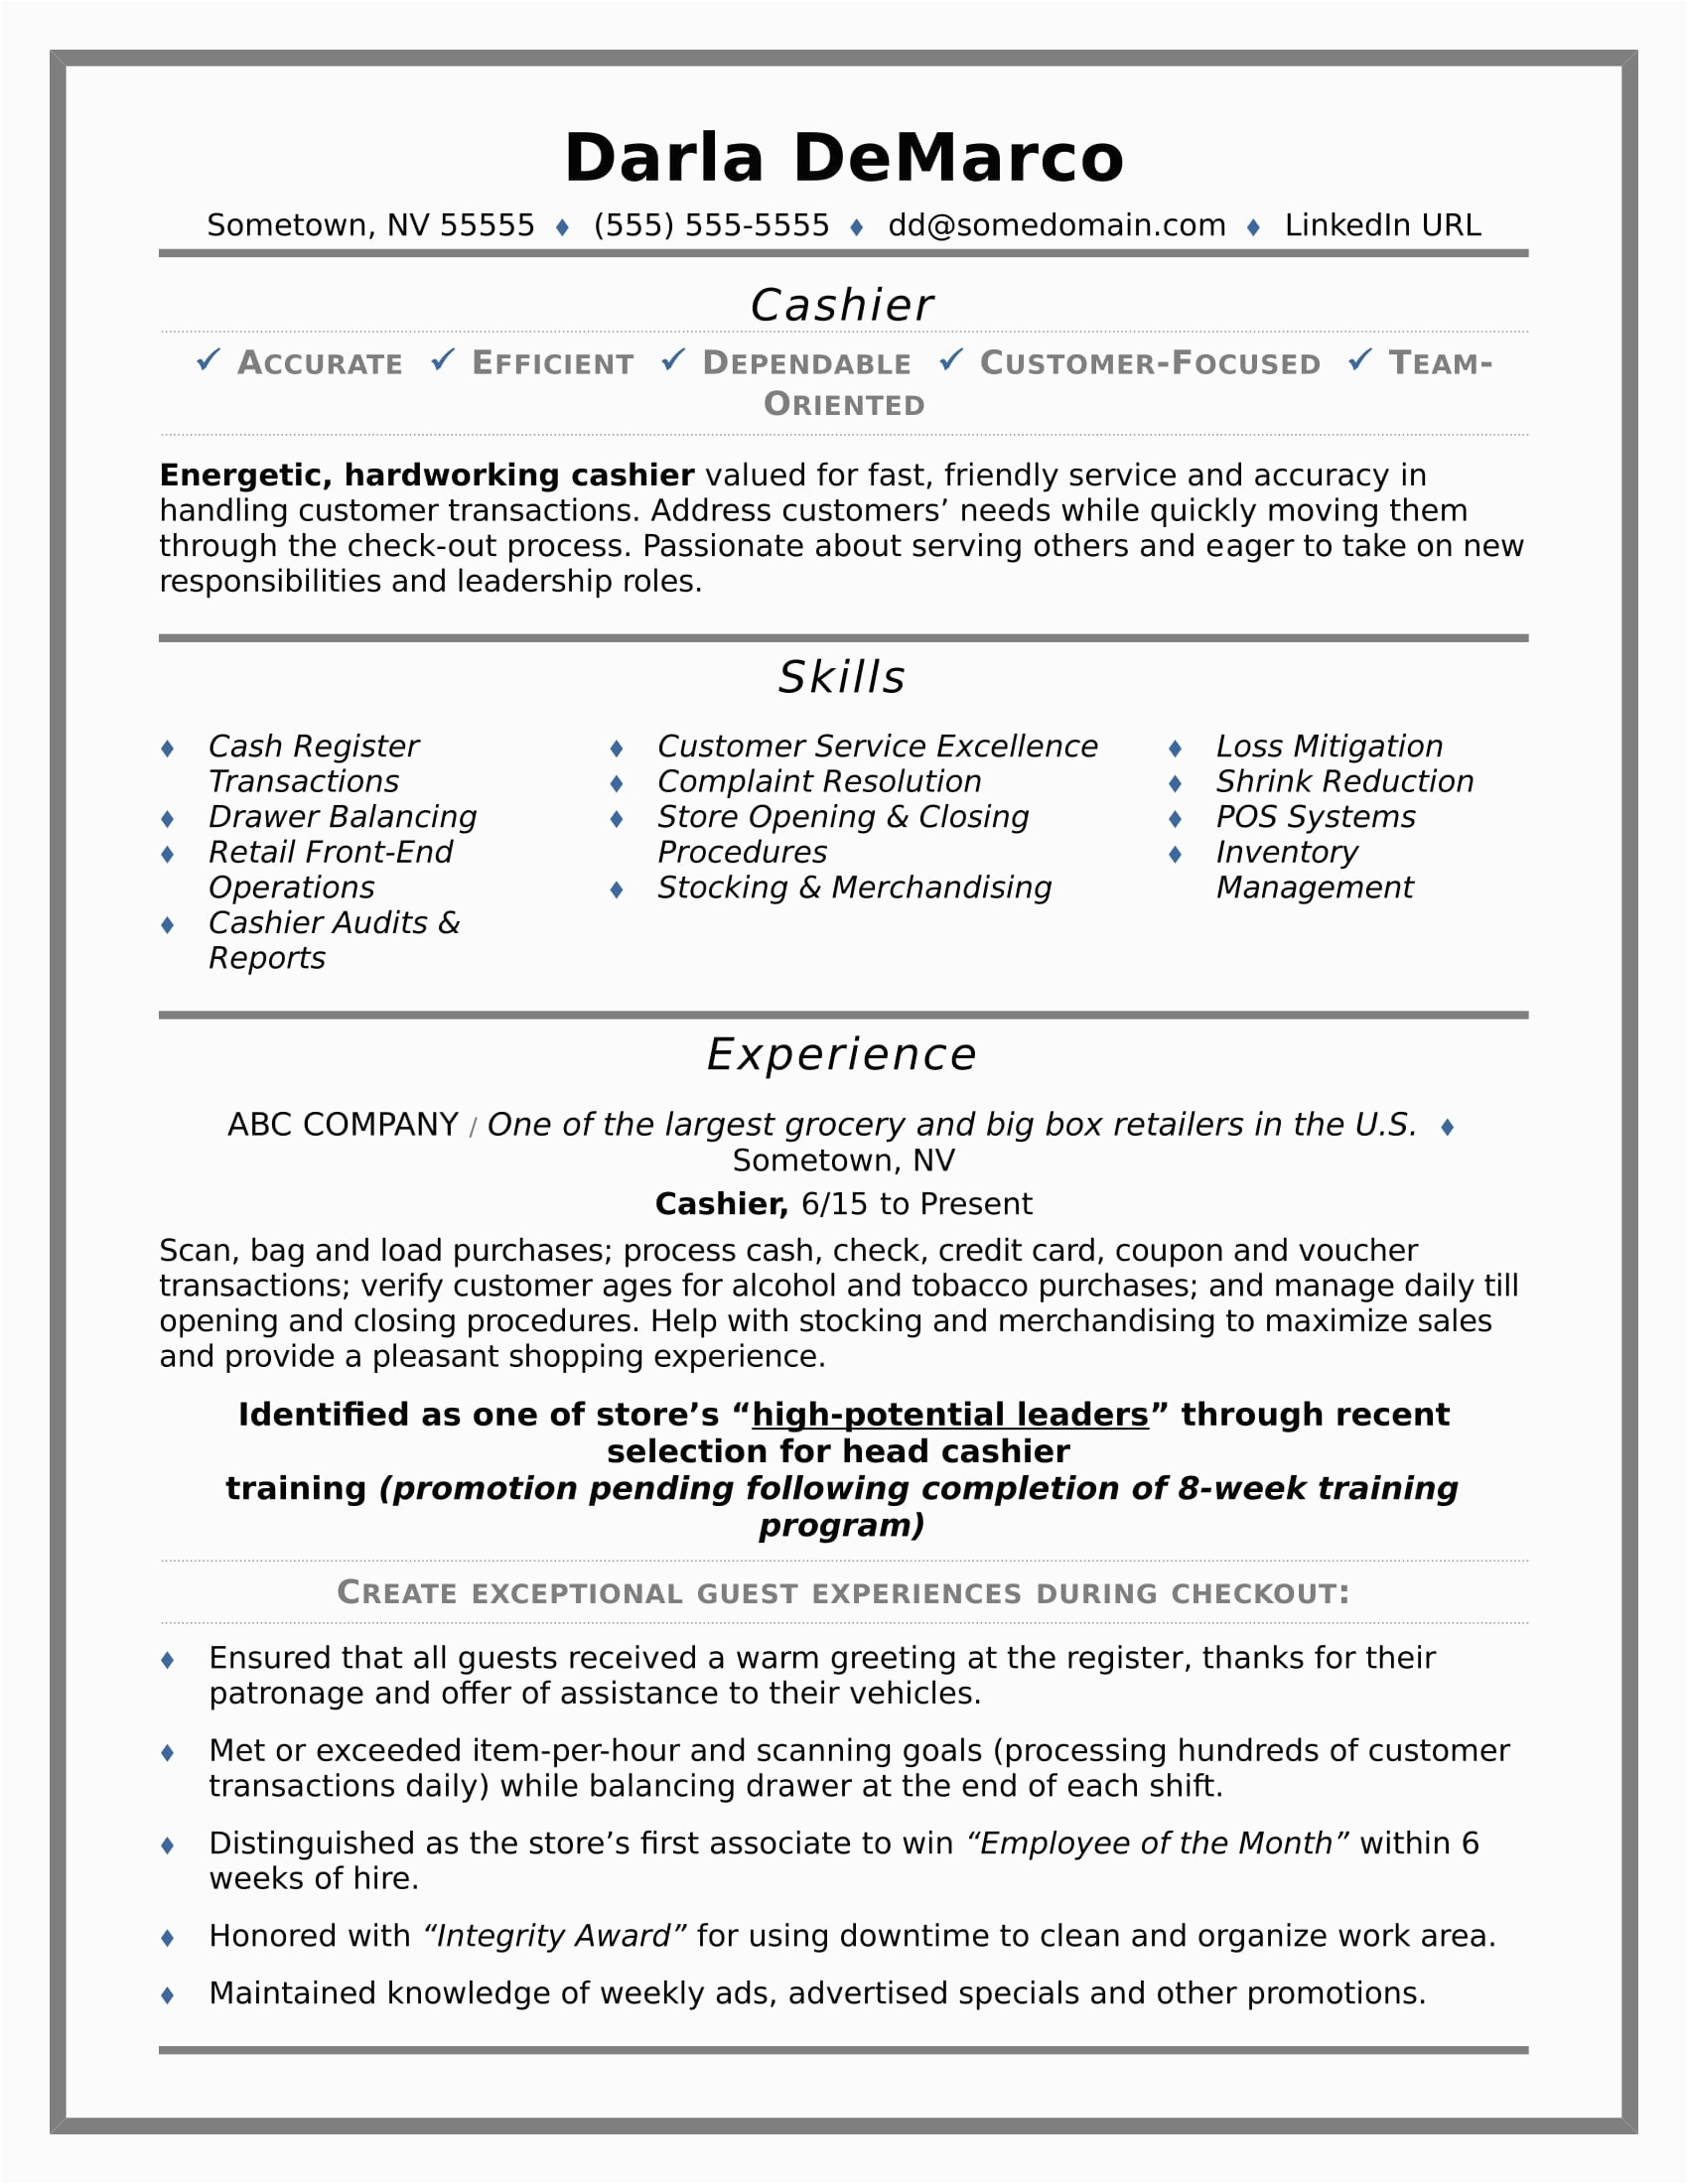 Sample Resume Objective for Cashier Position Cashier Resume Sample